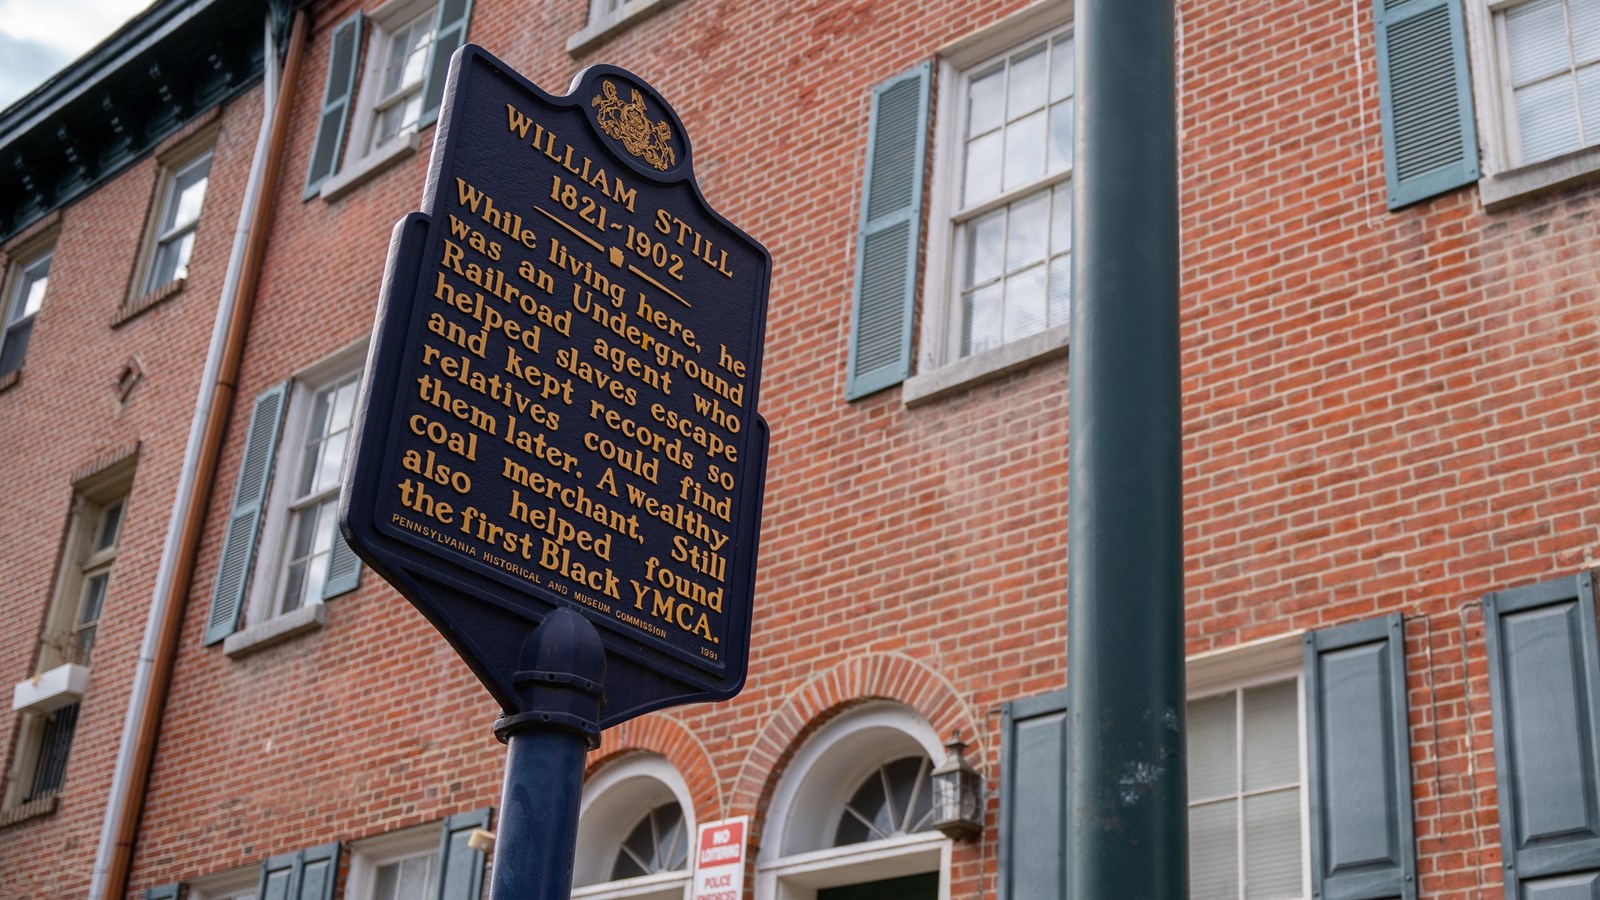 The William Still Marker sits outside his former residence in Philadelphia